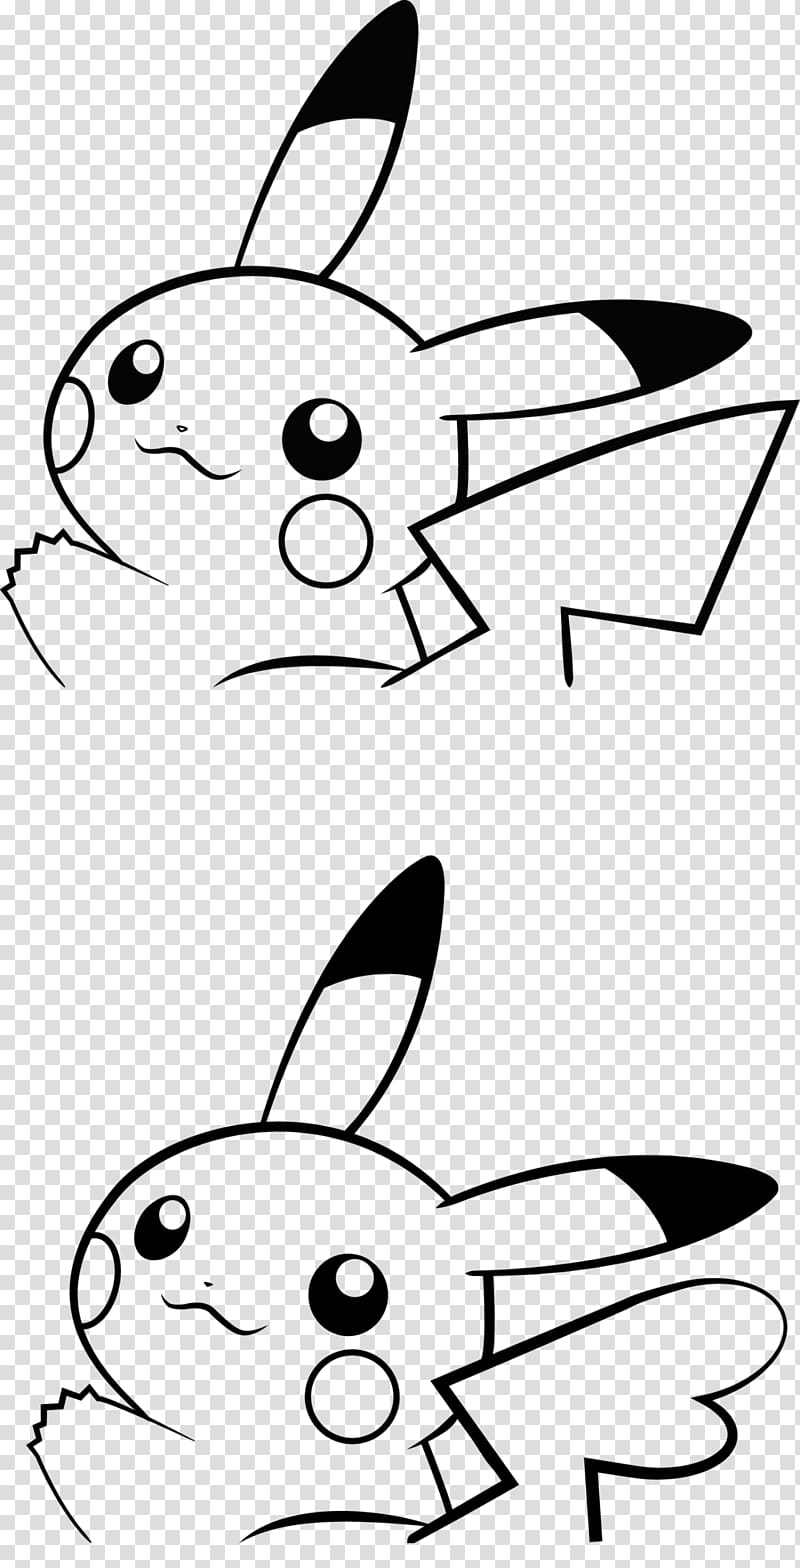 pokemon black and white ash and pikachu